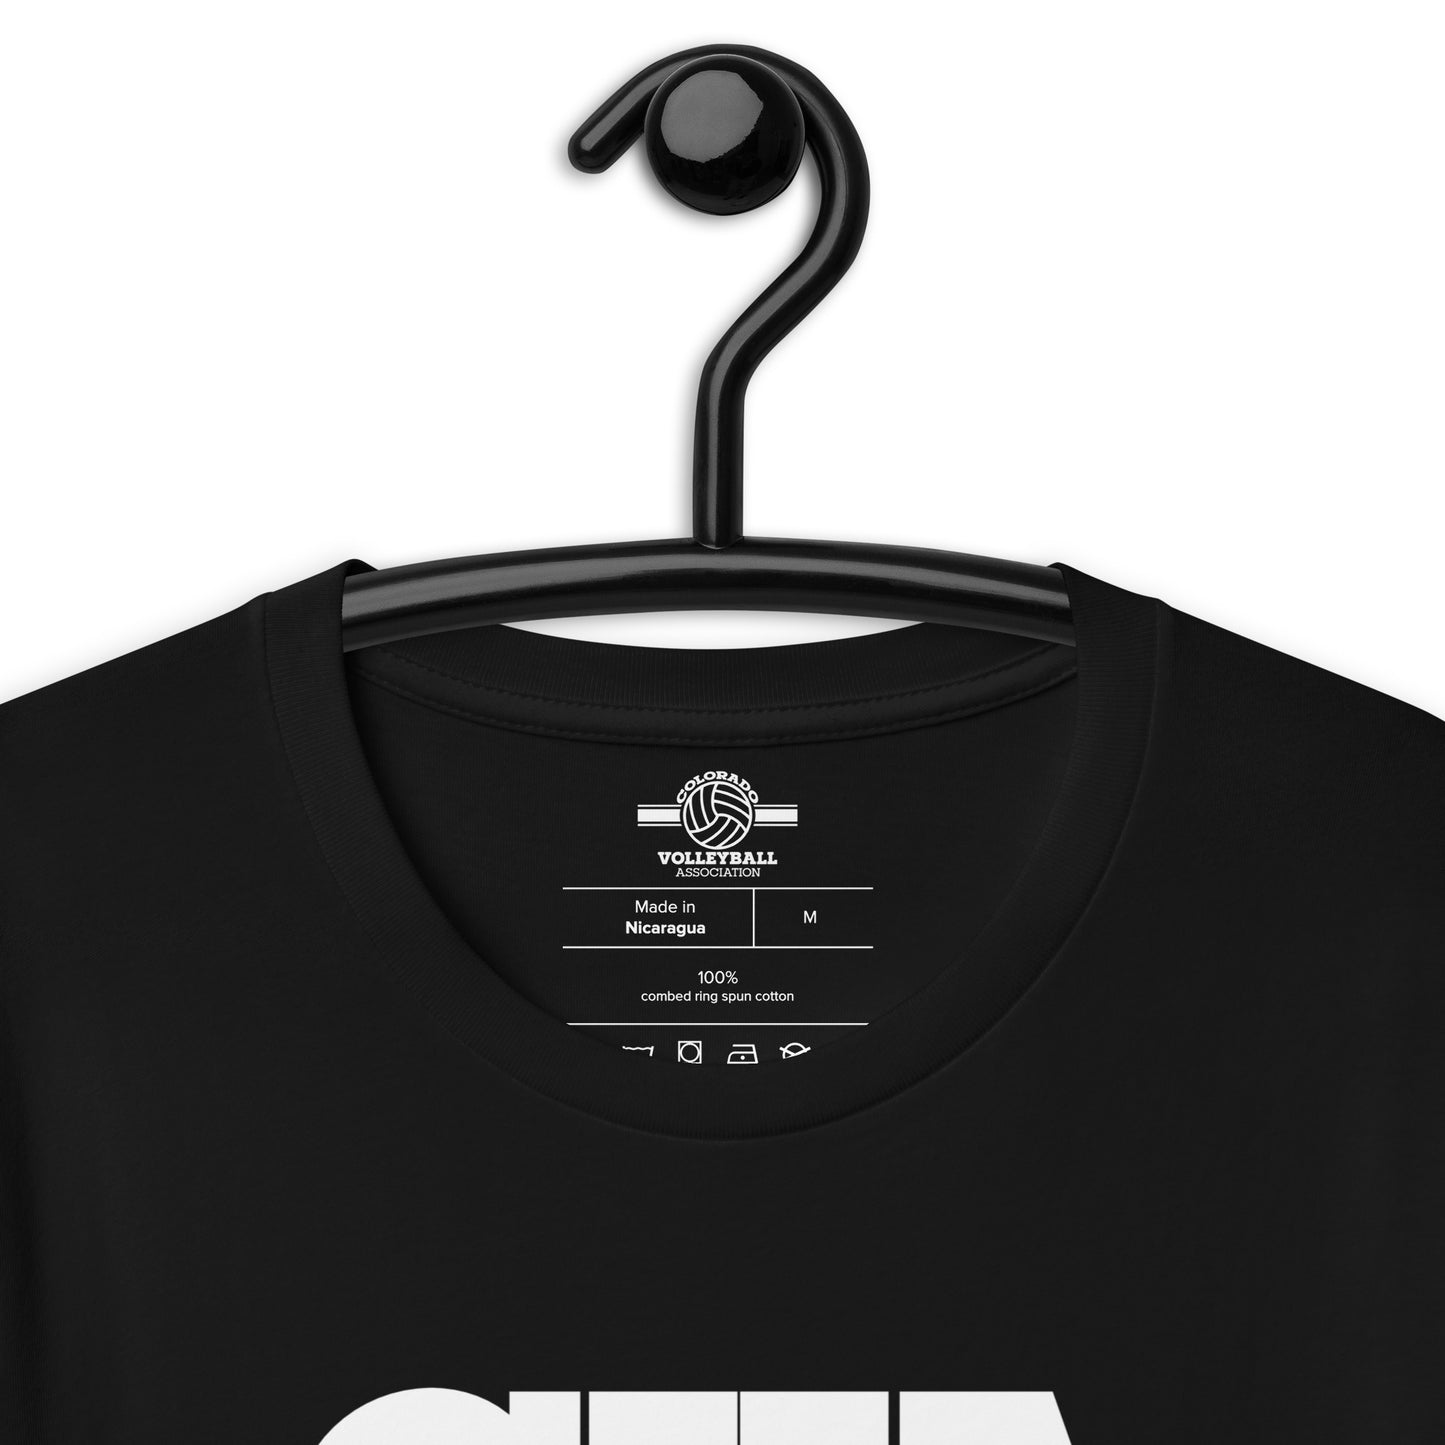 Unisex Short Sleeve T-Shirt: Large CVA Logo - Multiple Color Options